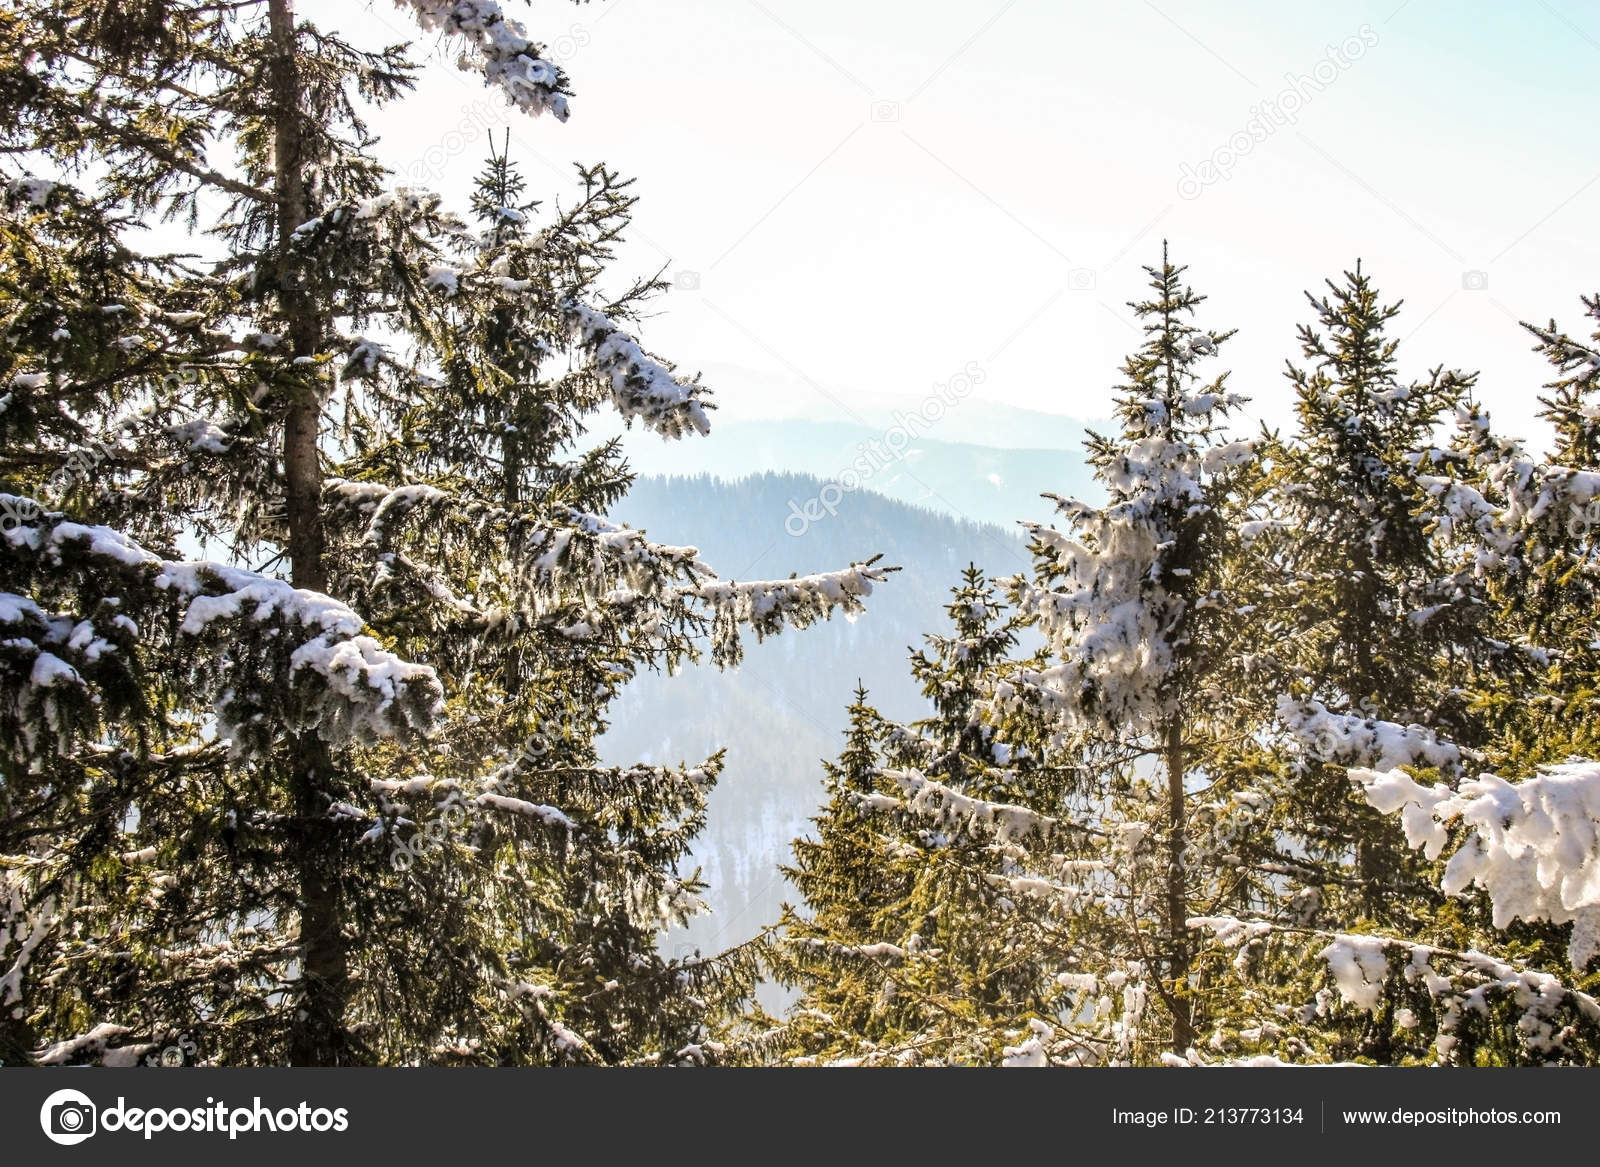 Winter Wonderland Mountain Scenery Centuries Old Spruce Pine